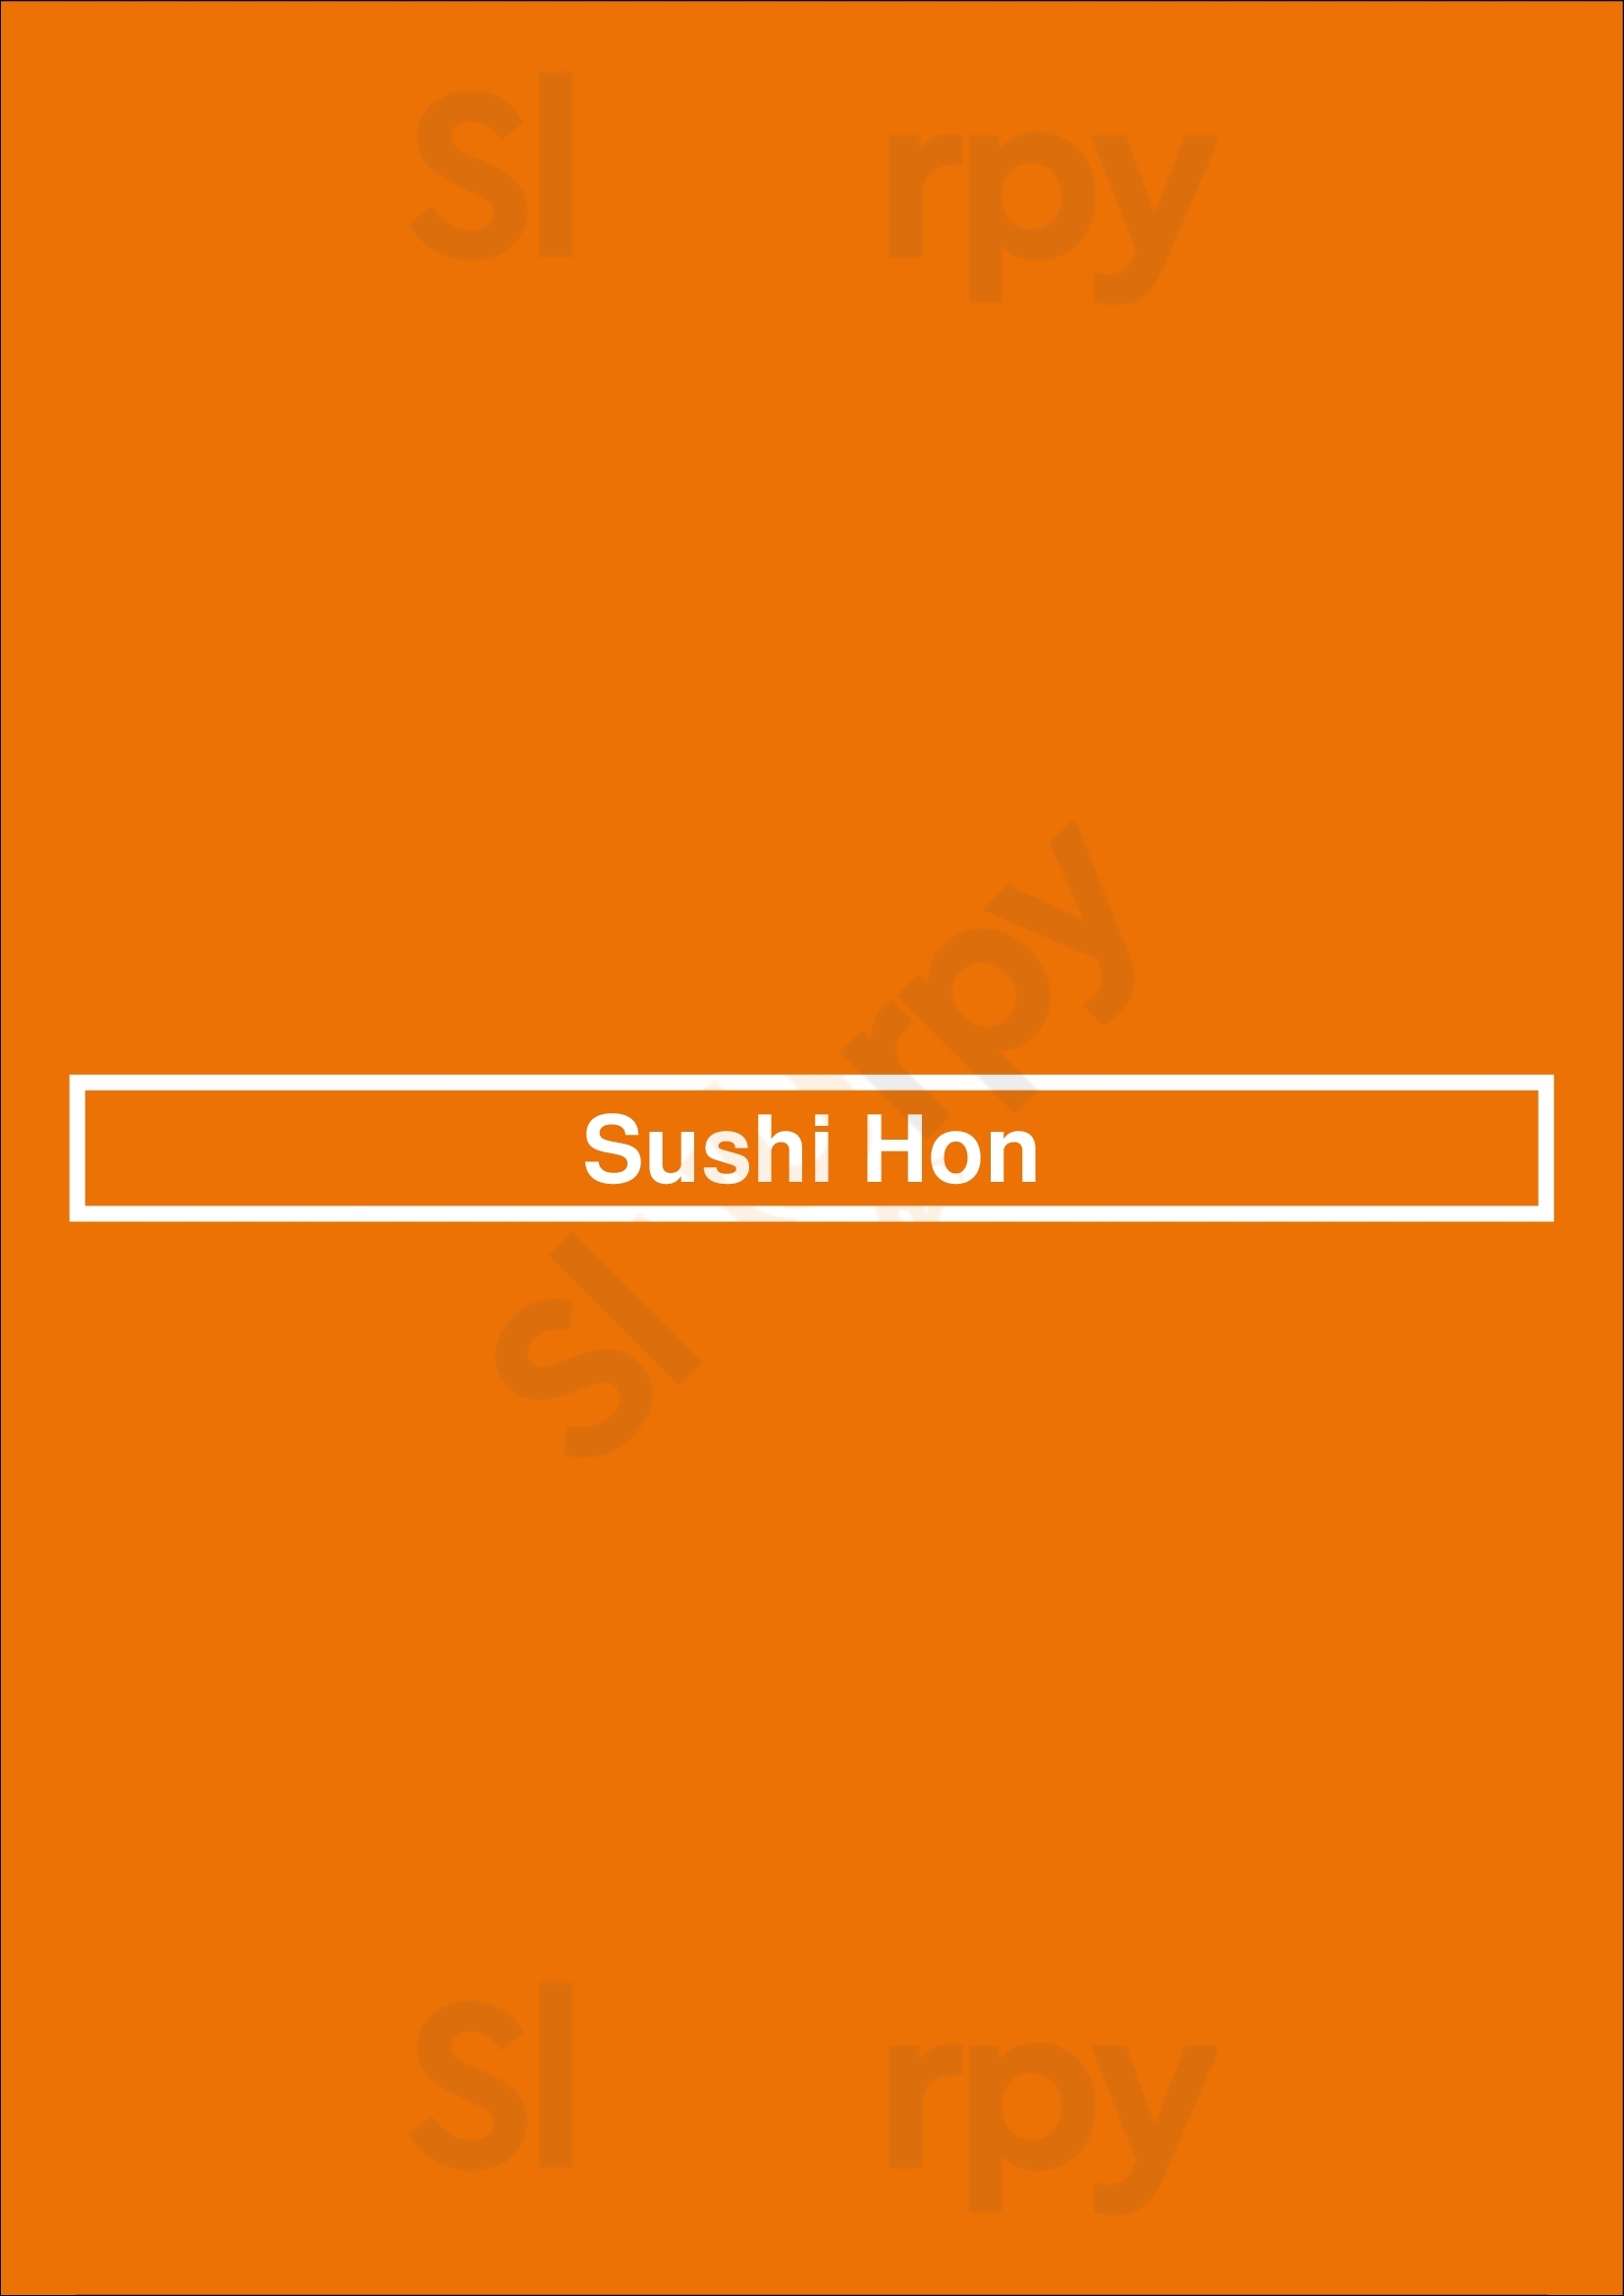 Sushi Hon Los Angeles Menu - 1